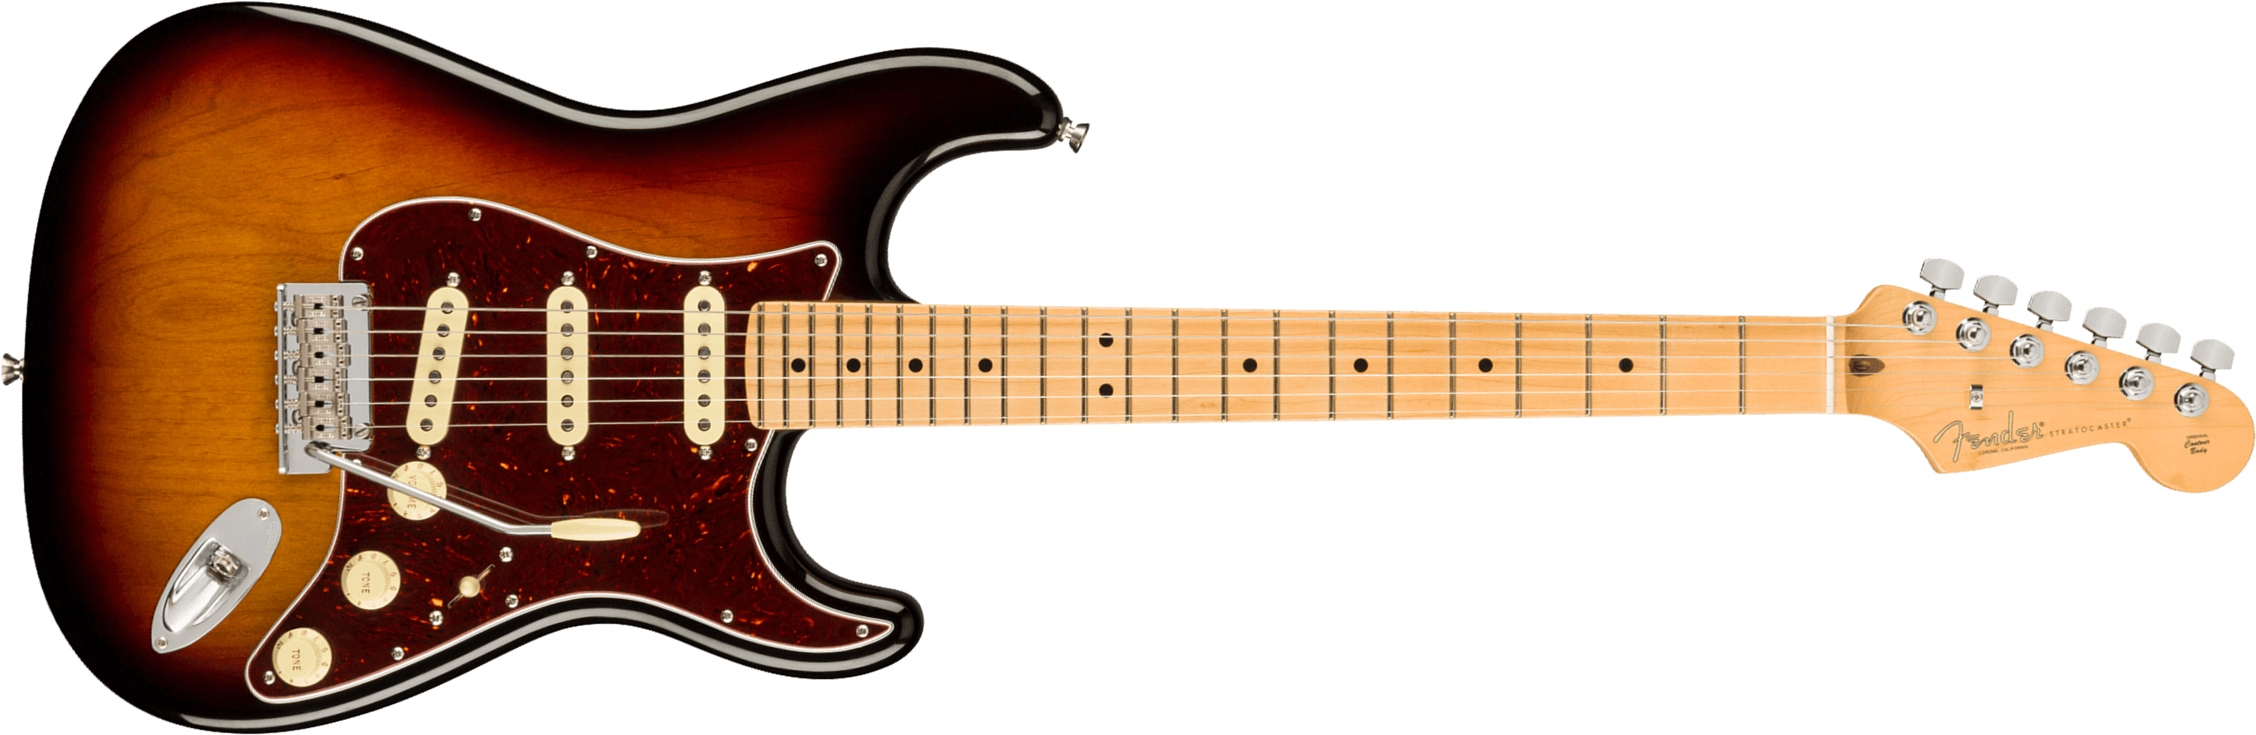 Fender Strat American Professional Ii Usa Mn - 3-color Sunburst - Guitarra eléctrica con forma de str. - Main picture